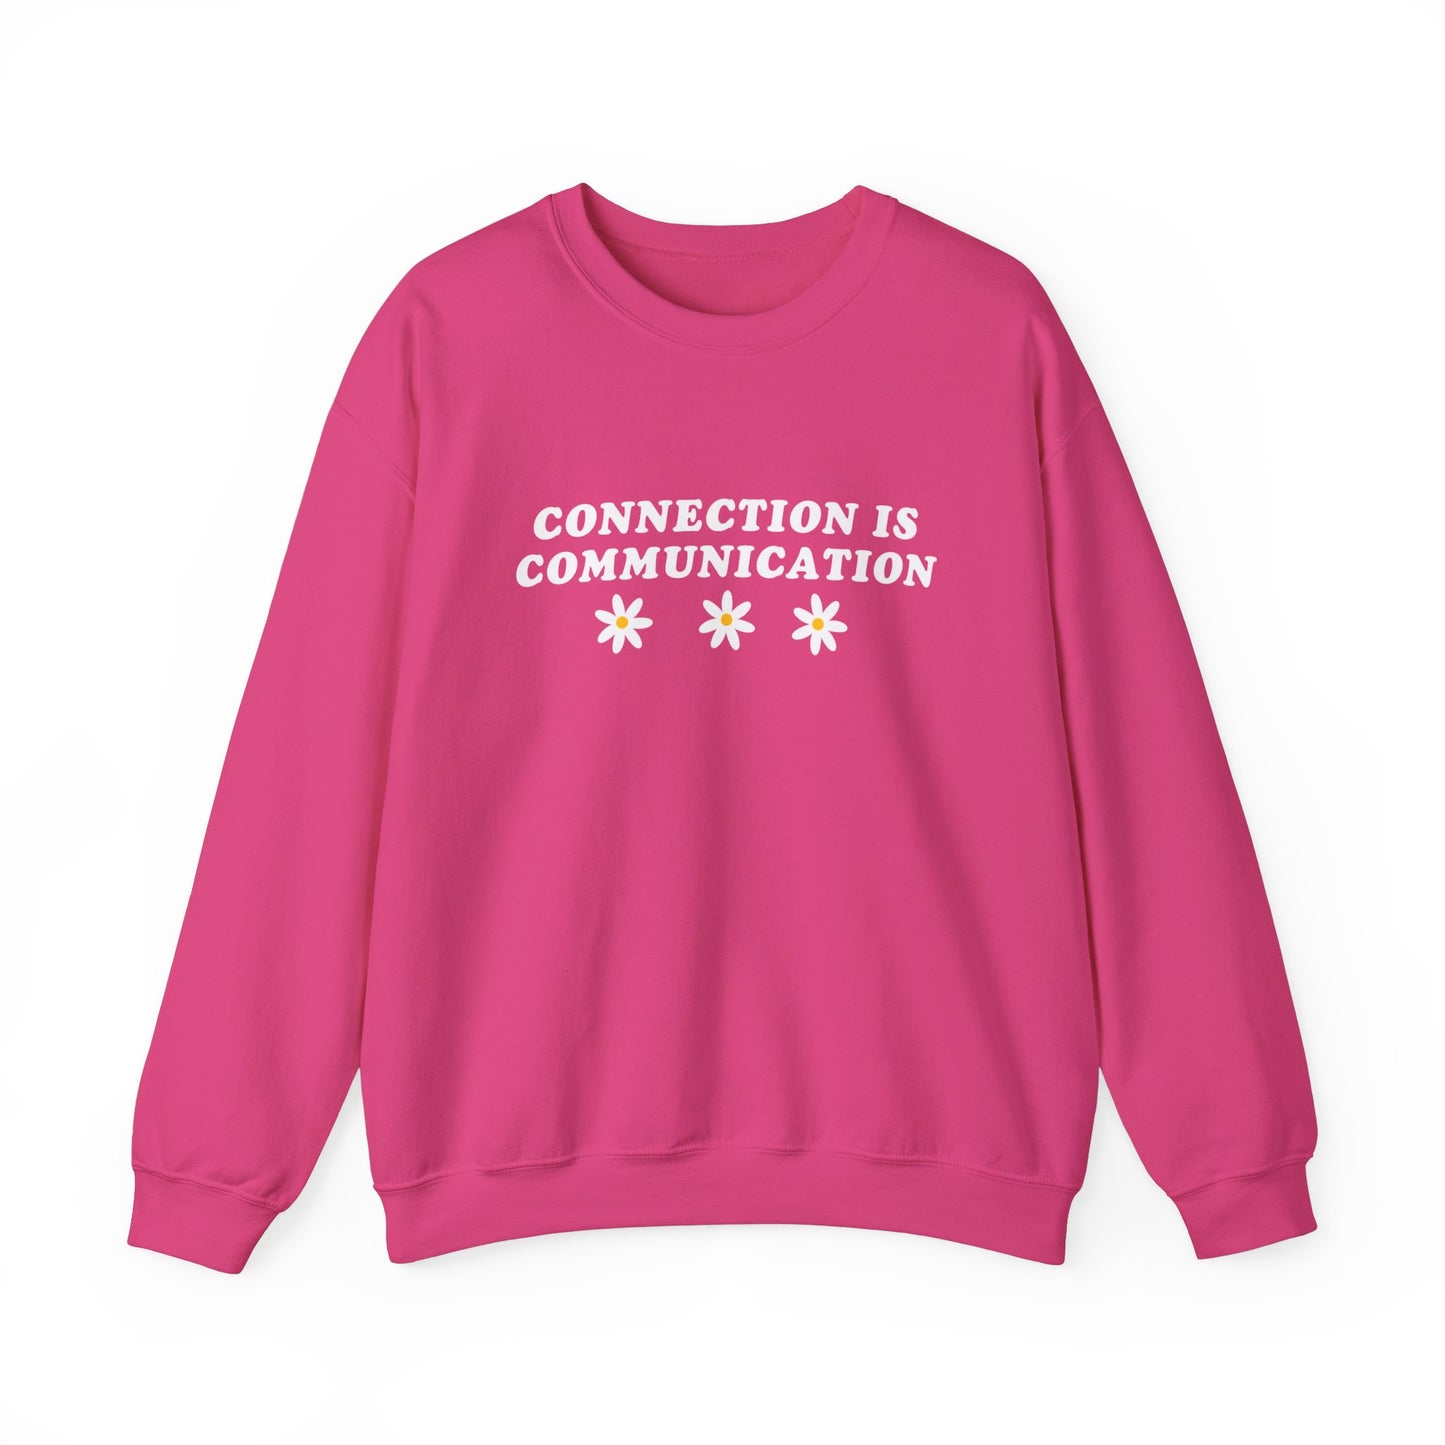 Connection is Communication Crewneck Sweatshirt